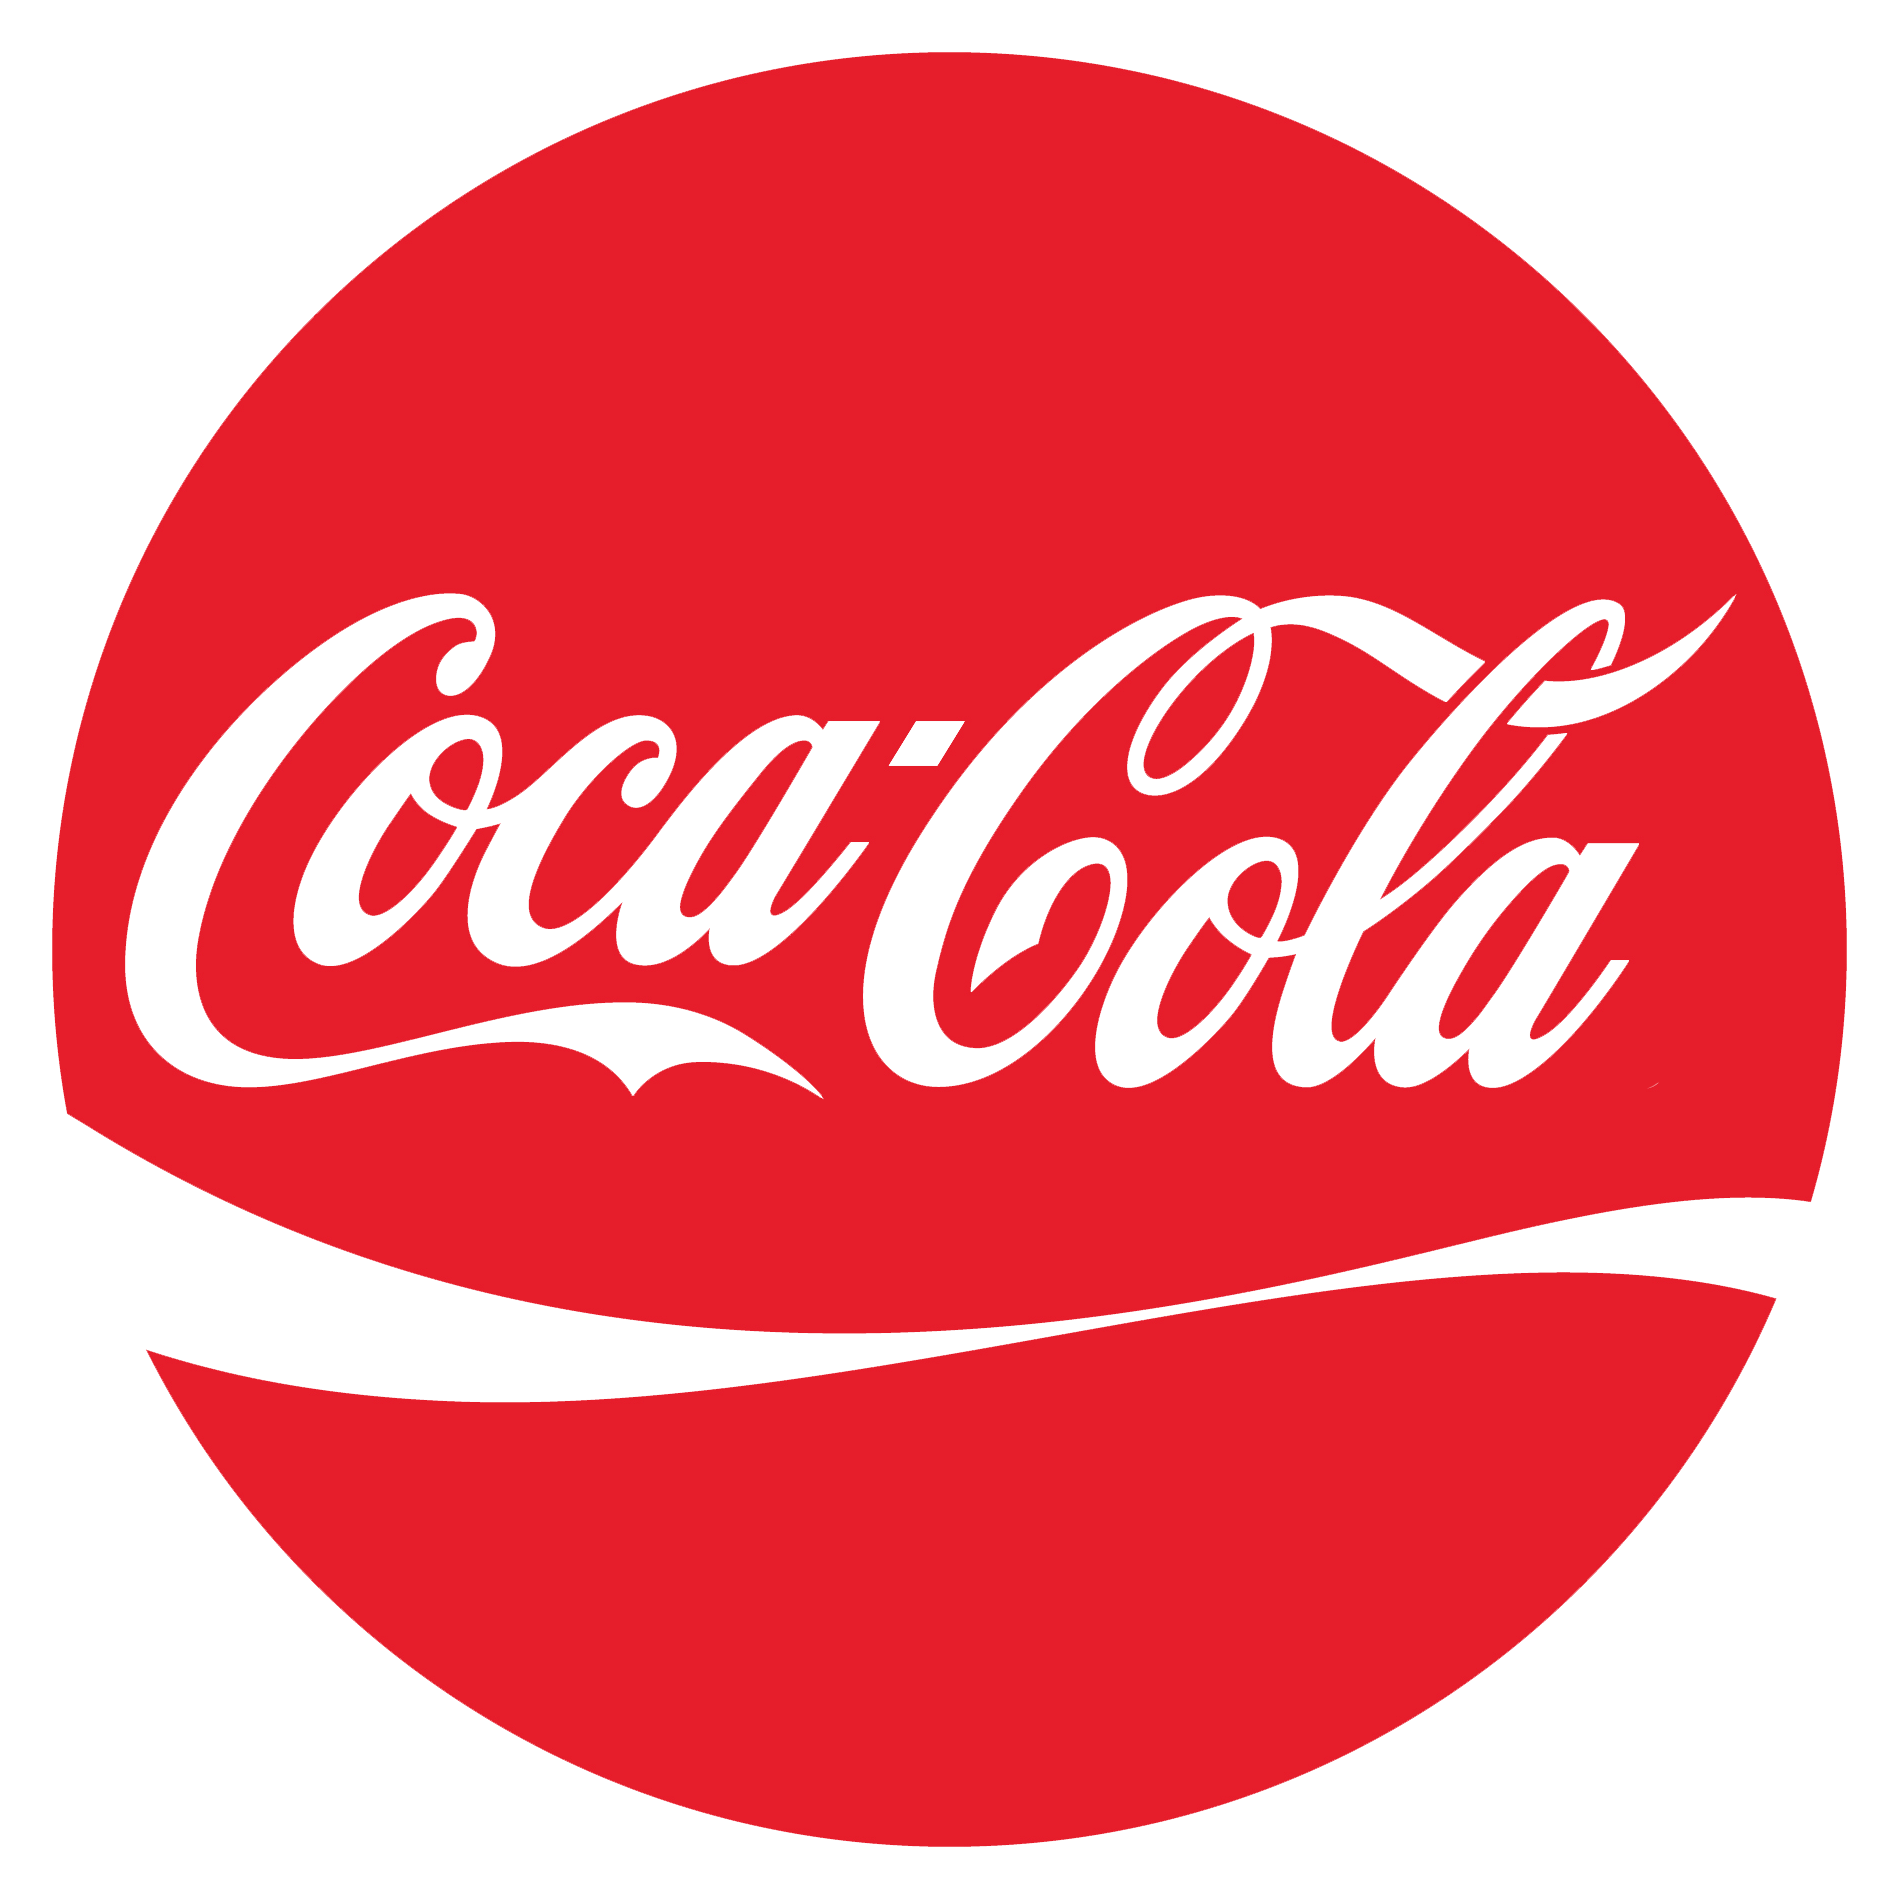 imgbin-the-coca-cola-company-logo-brand-coca-cola-3y7nwzCnNEbXtgnk5GgxUiqhe.png